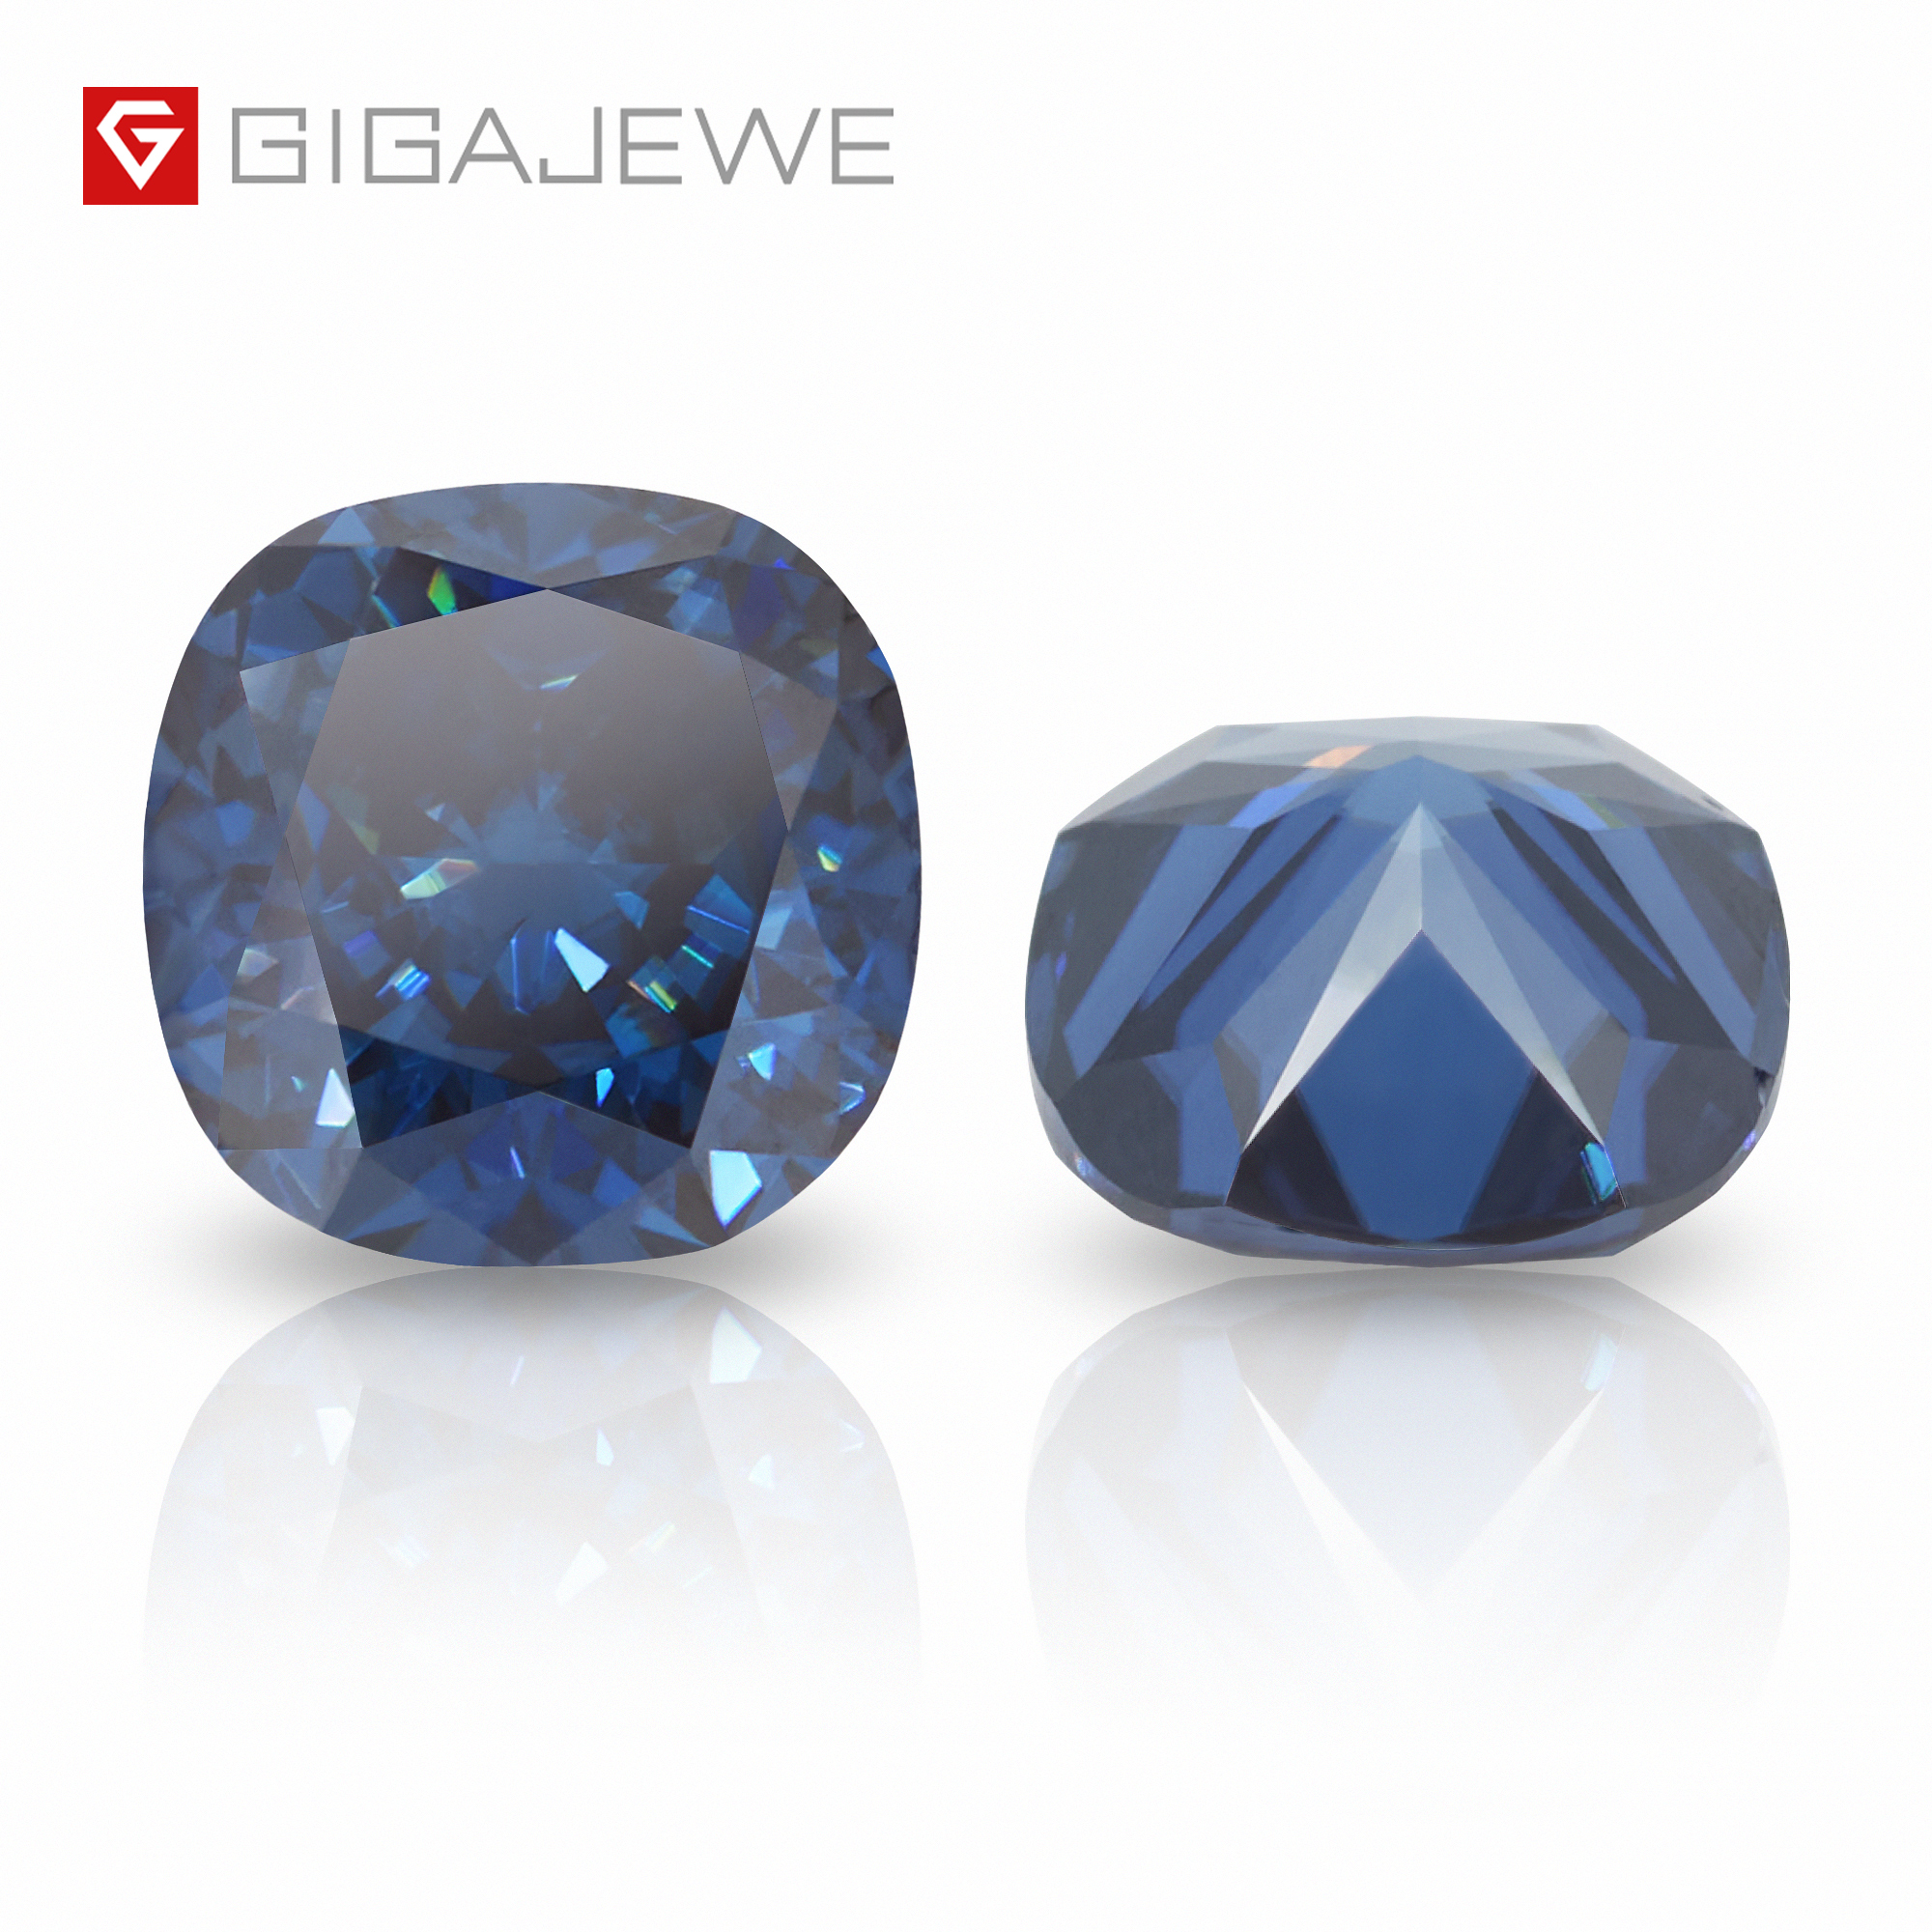 

GIGAJEWE Dark blue Color Cushion cut VVS1 moissanite diamond 6mm-8.5mm for jewelry making